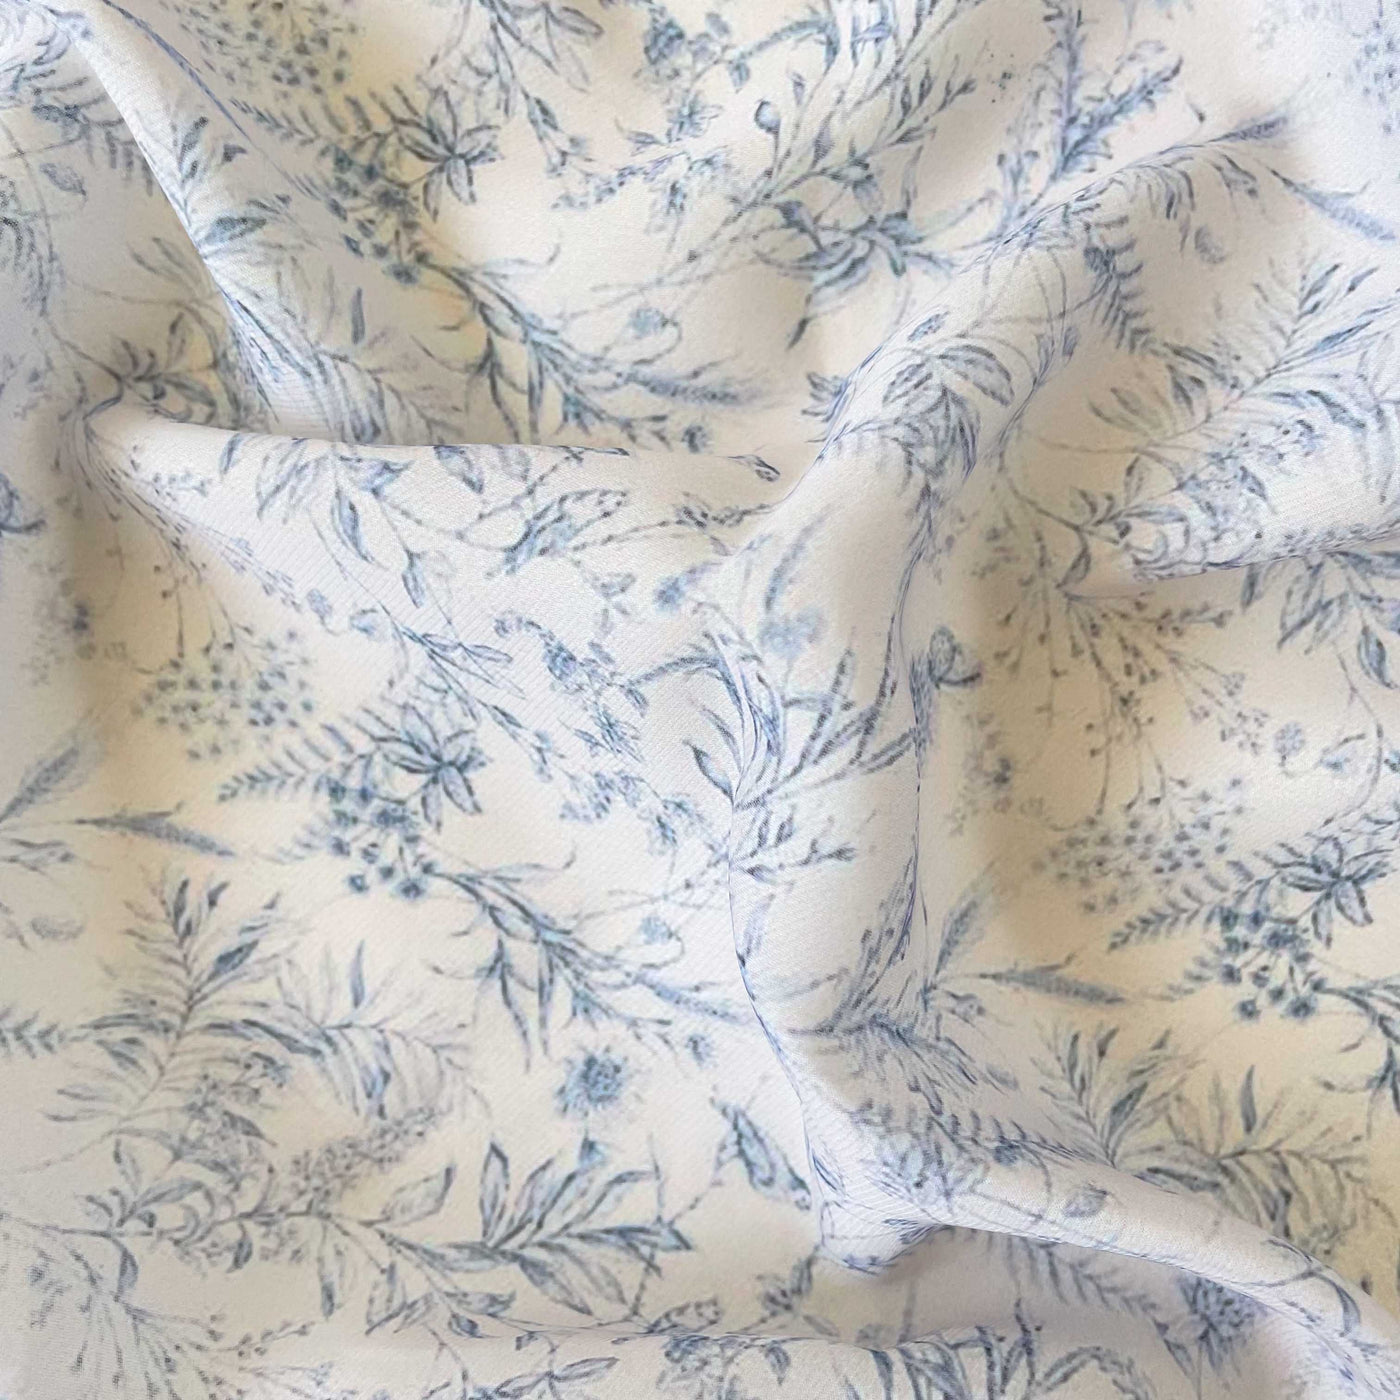 Digital Printed Organza Fabric Fabric Blue & Grey Victorian Floral Garden Printed Soft Organza Fabric (Width 45 Inches)